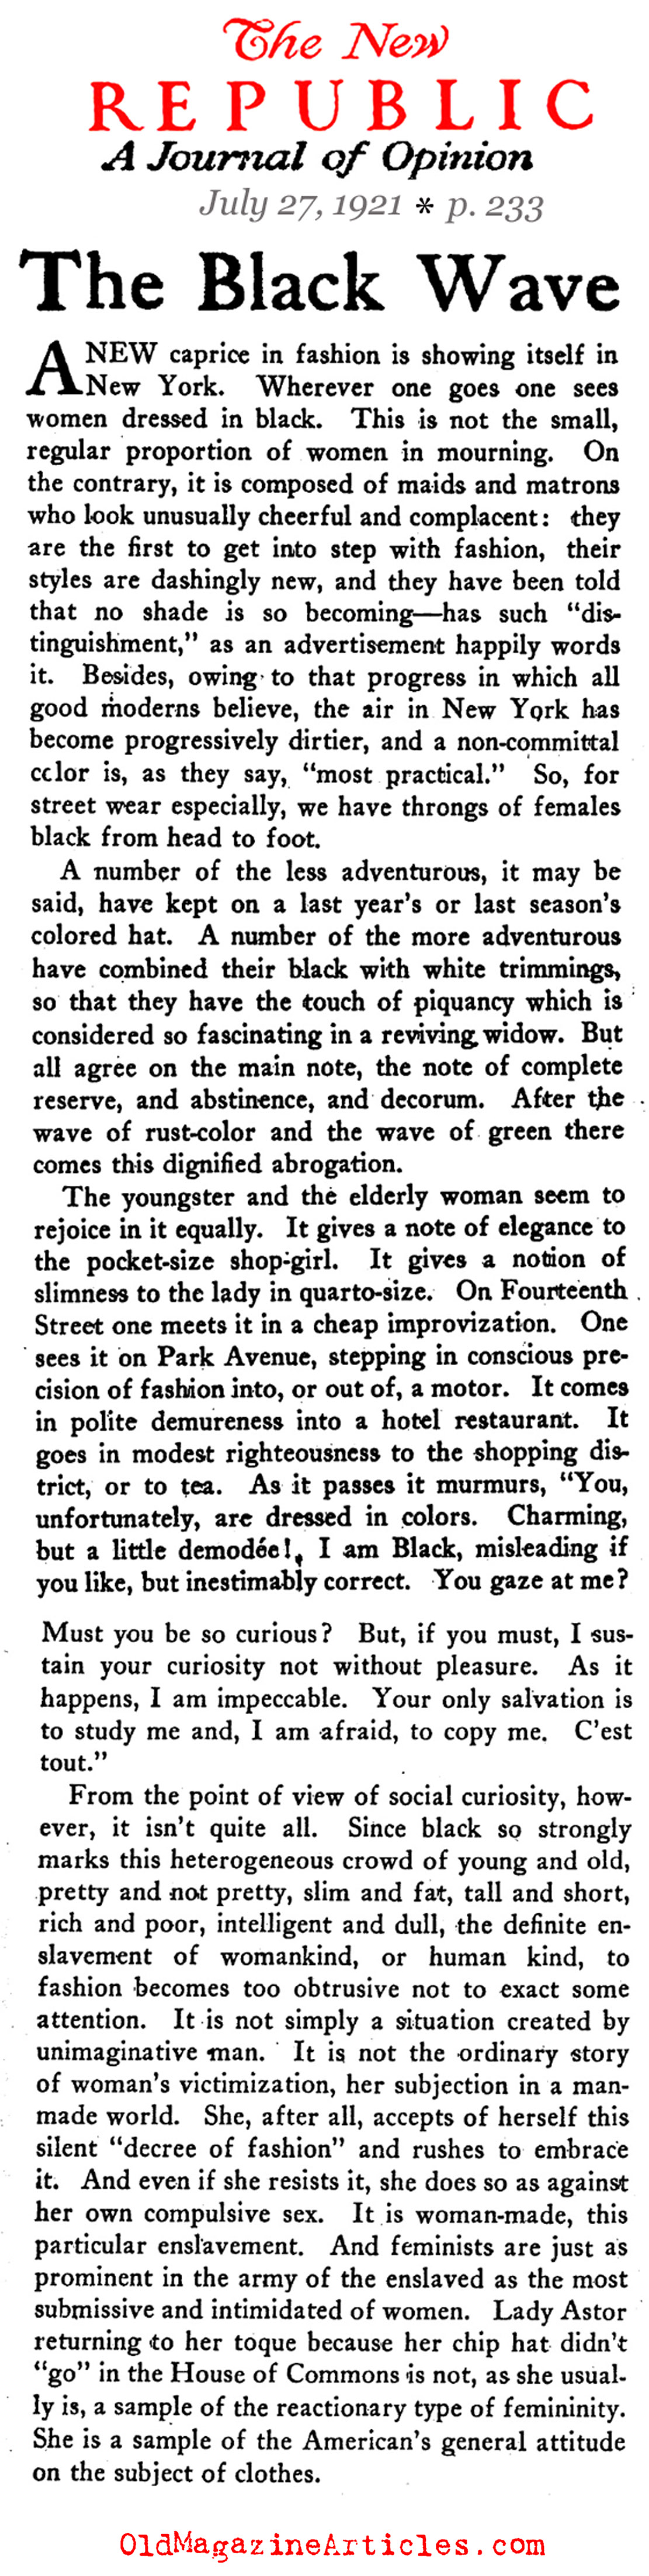 The Black Dress Arrives (The New Republic, 1921)